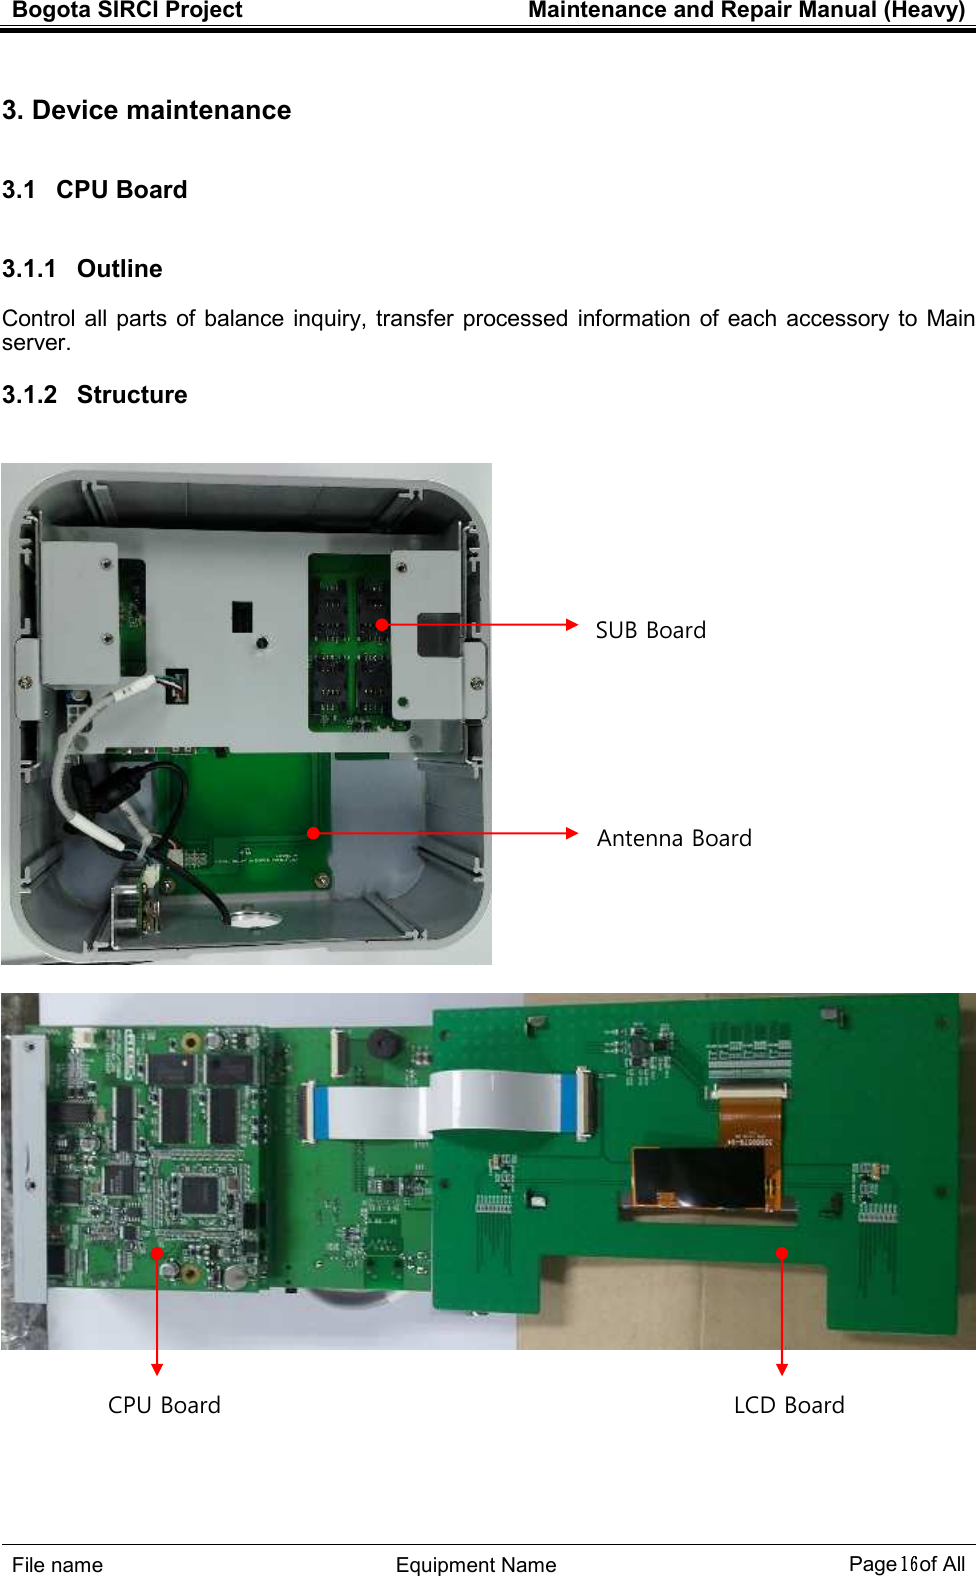 Bogota SIRCI Project  Maintenance and Repair Manual (Heavy)     １６１６１６１６ ! 3. Device maintenance   3.1   CPU Board 3.1.1   Outline &lt; &quot;(3.1.2   Structure       SUB Board    Antenna Board  CPU Board  LCD Board 